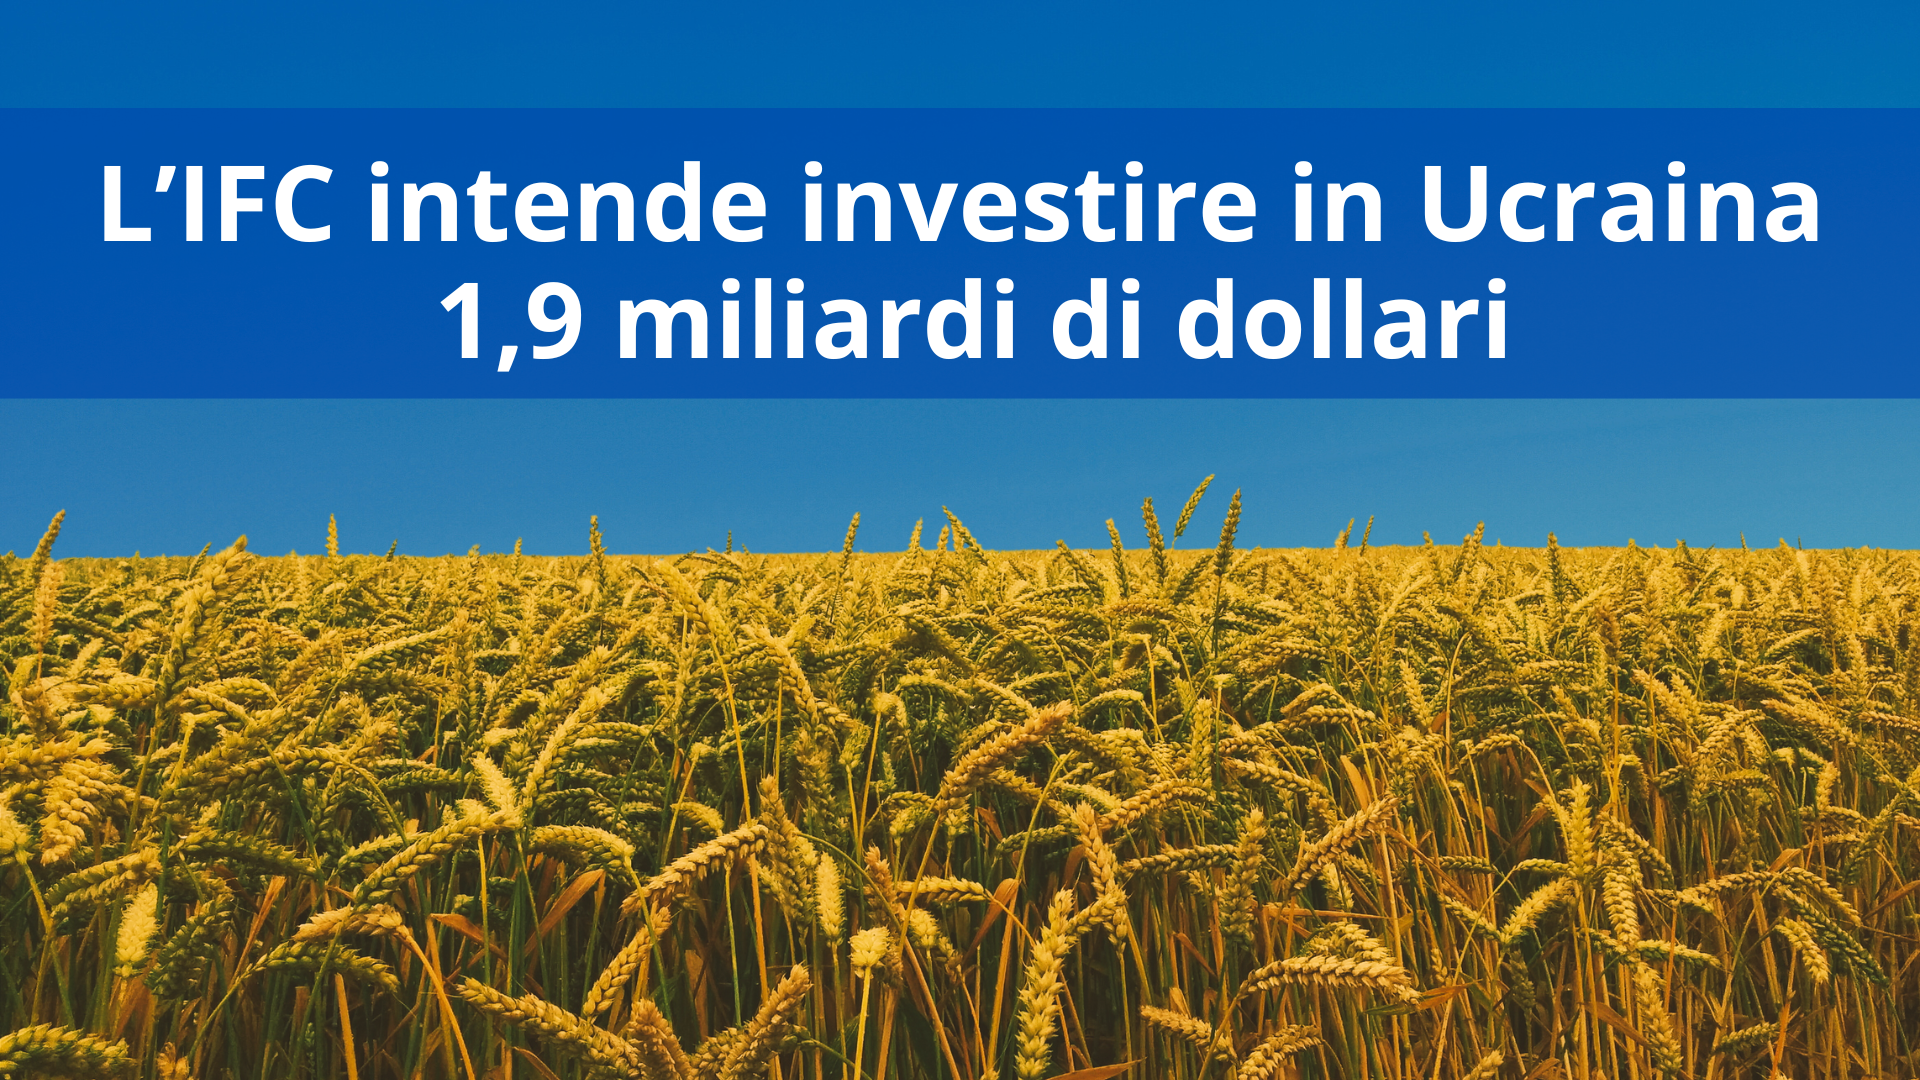 L’IFC intende investire in Ucraina 1,9 miliardi di dollari